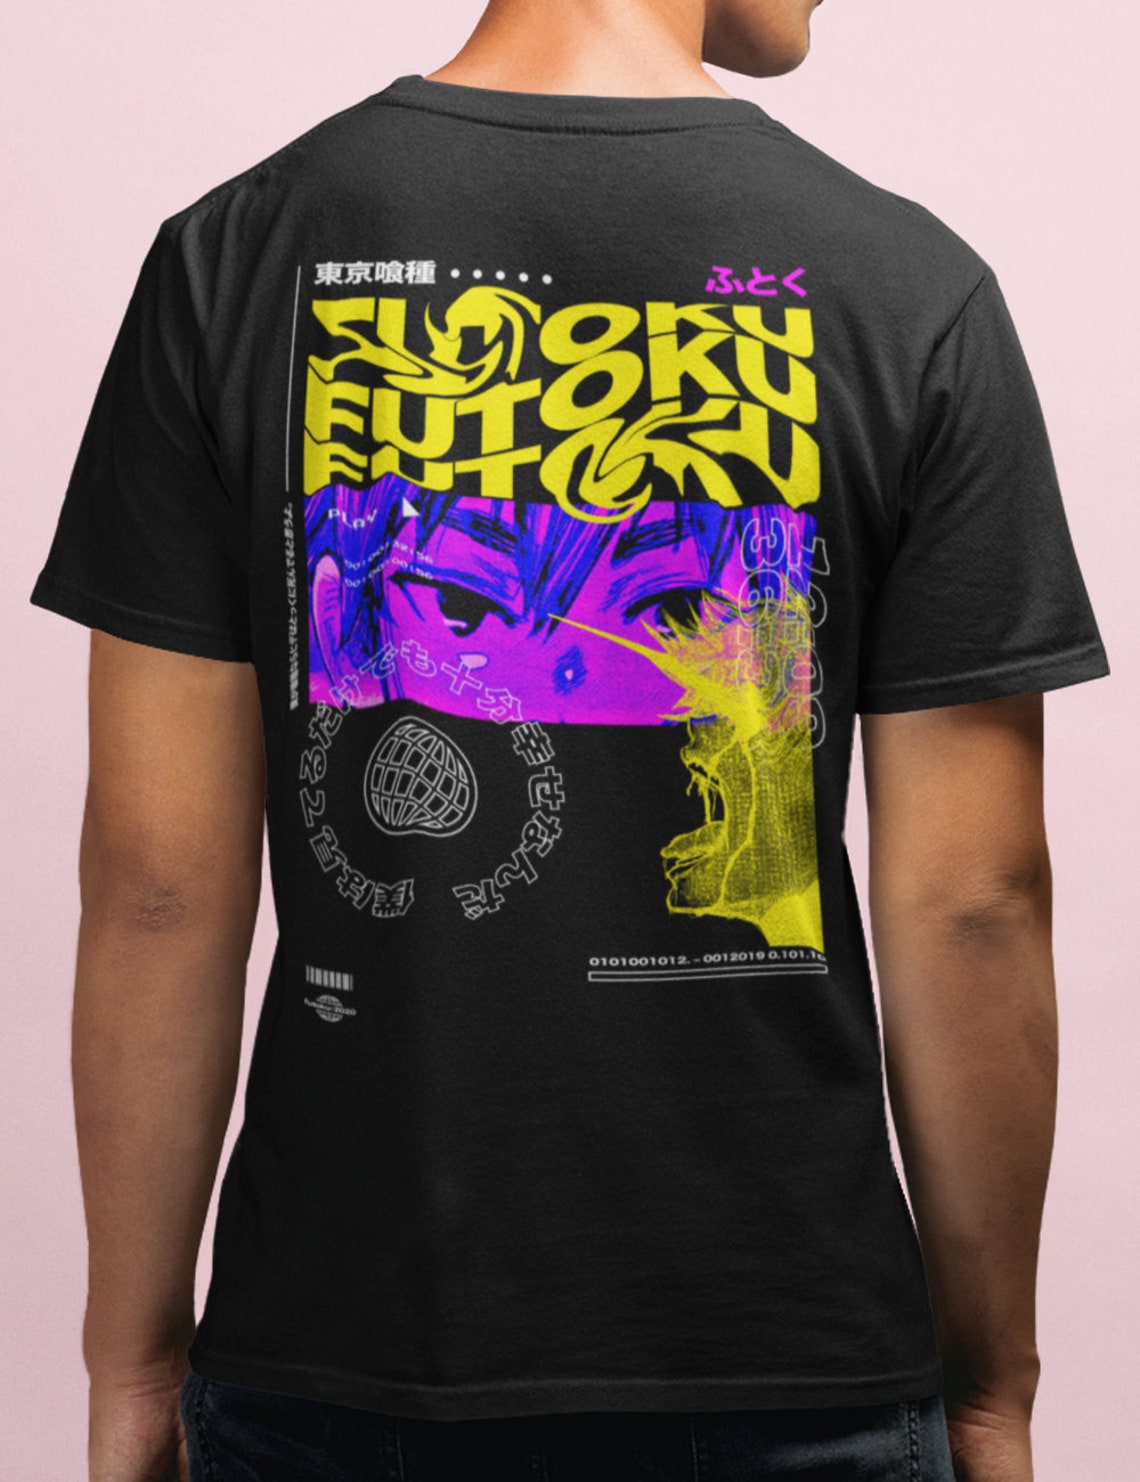 Cyberpunk Streetwear Anime Shirt Futoku Limited Edition - Etsy